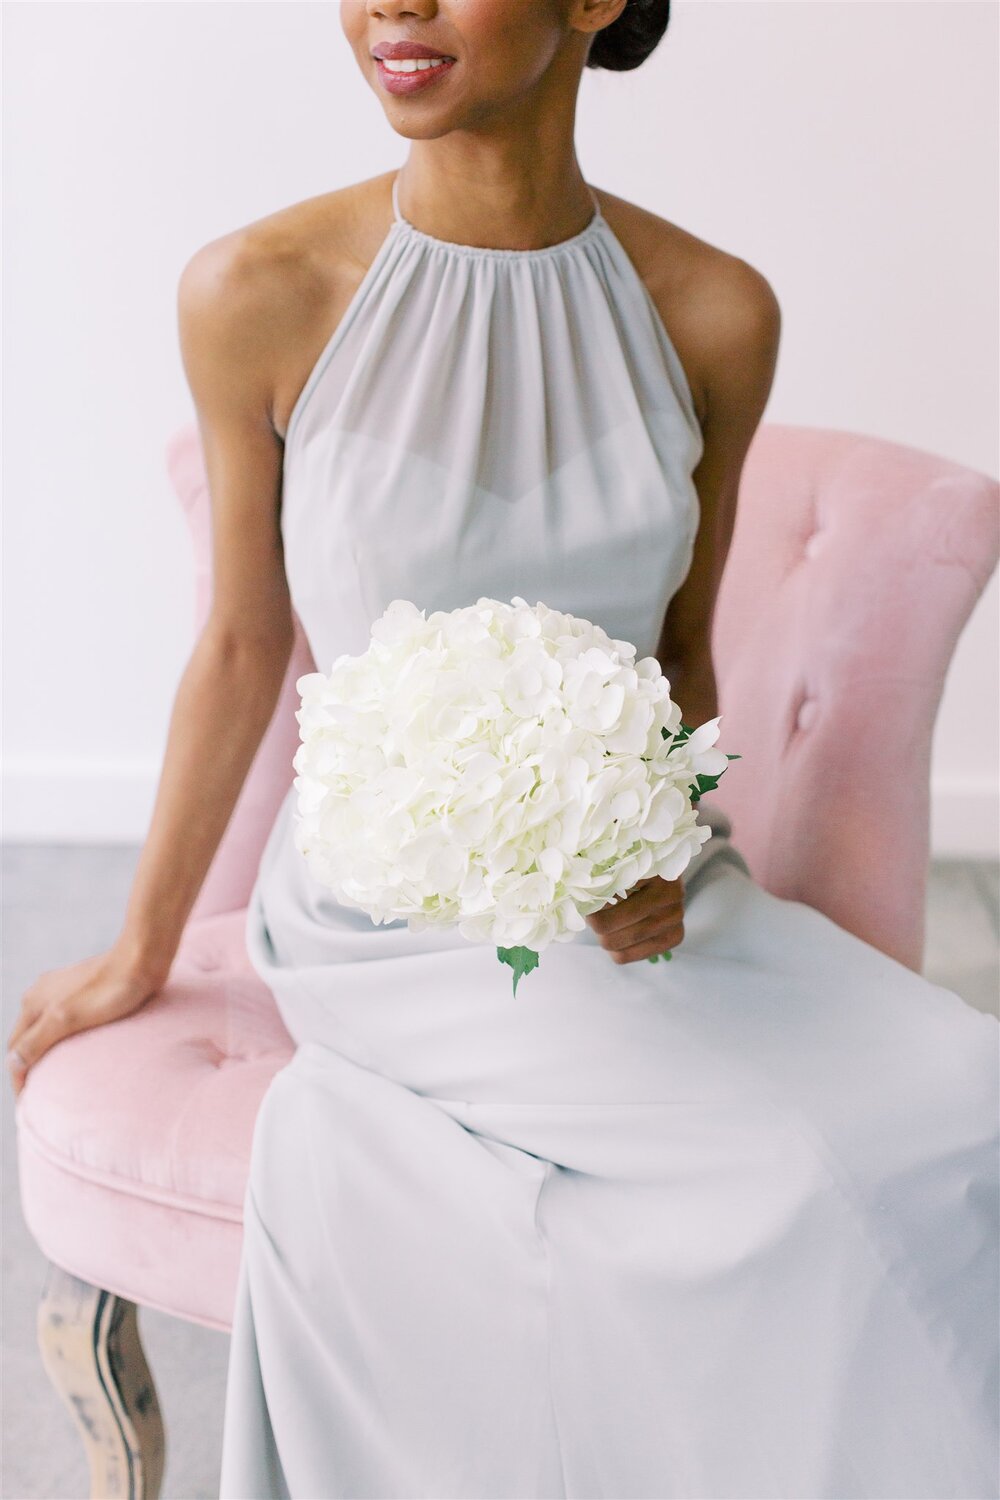 Flower_Lab_St._Louis_Budget_Wedding_Florist_Hydrangea_Bridesmaid_Bouquet.jpg